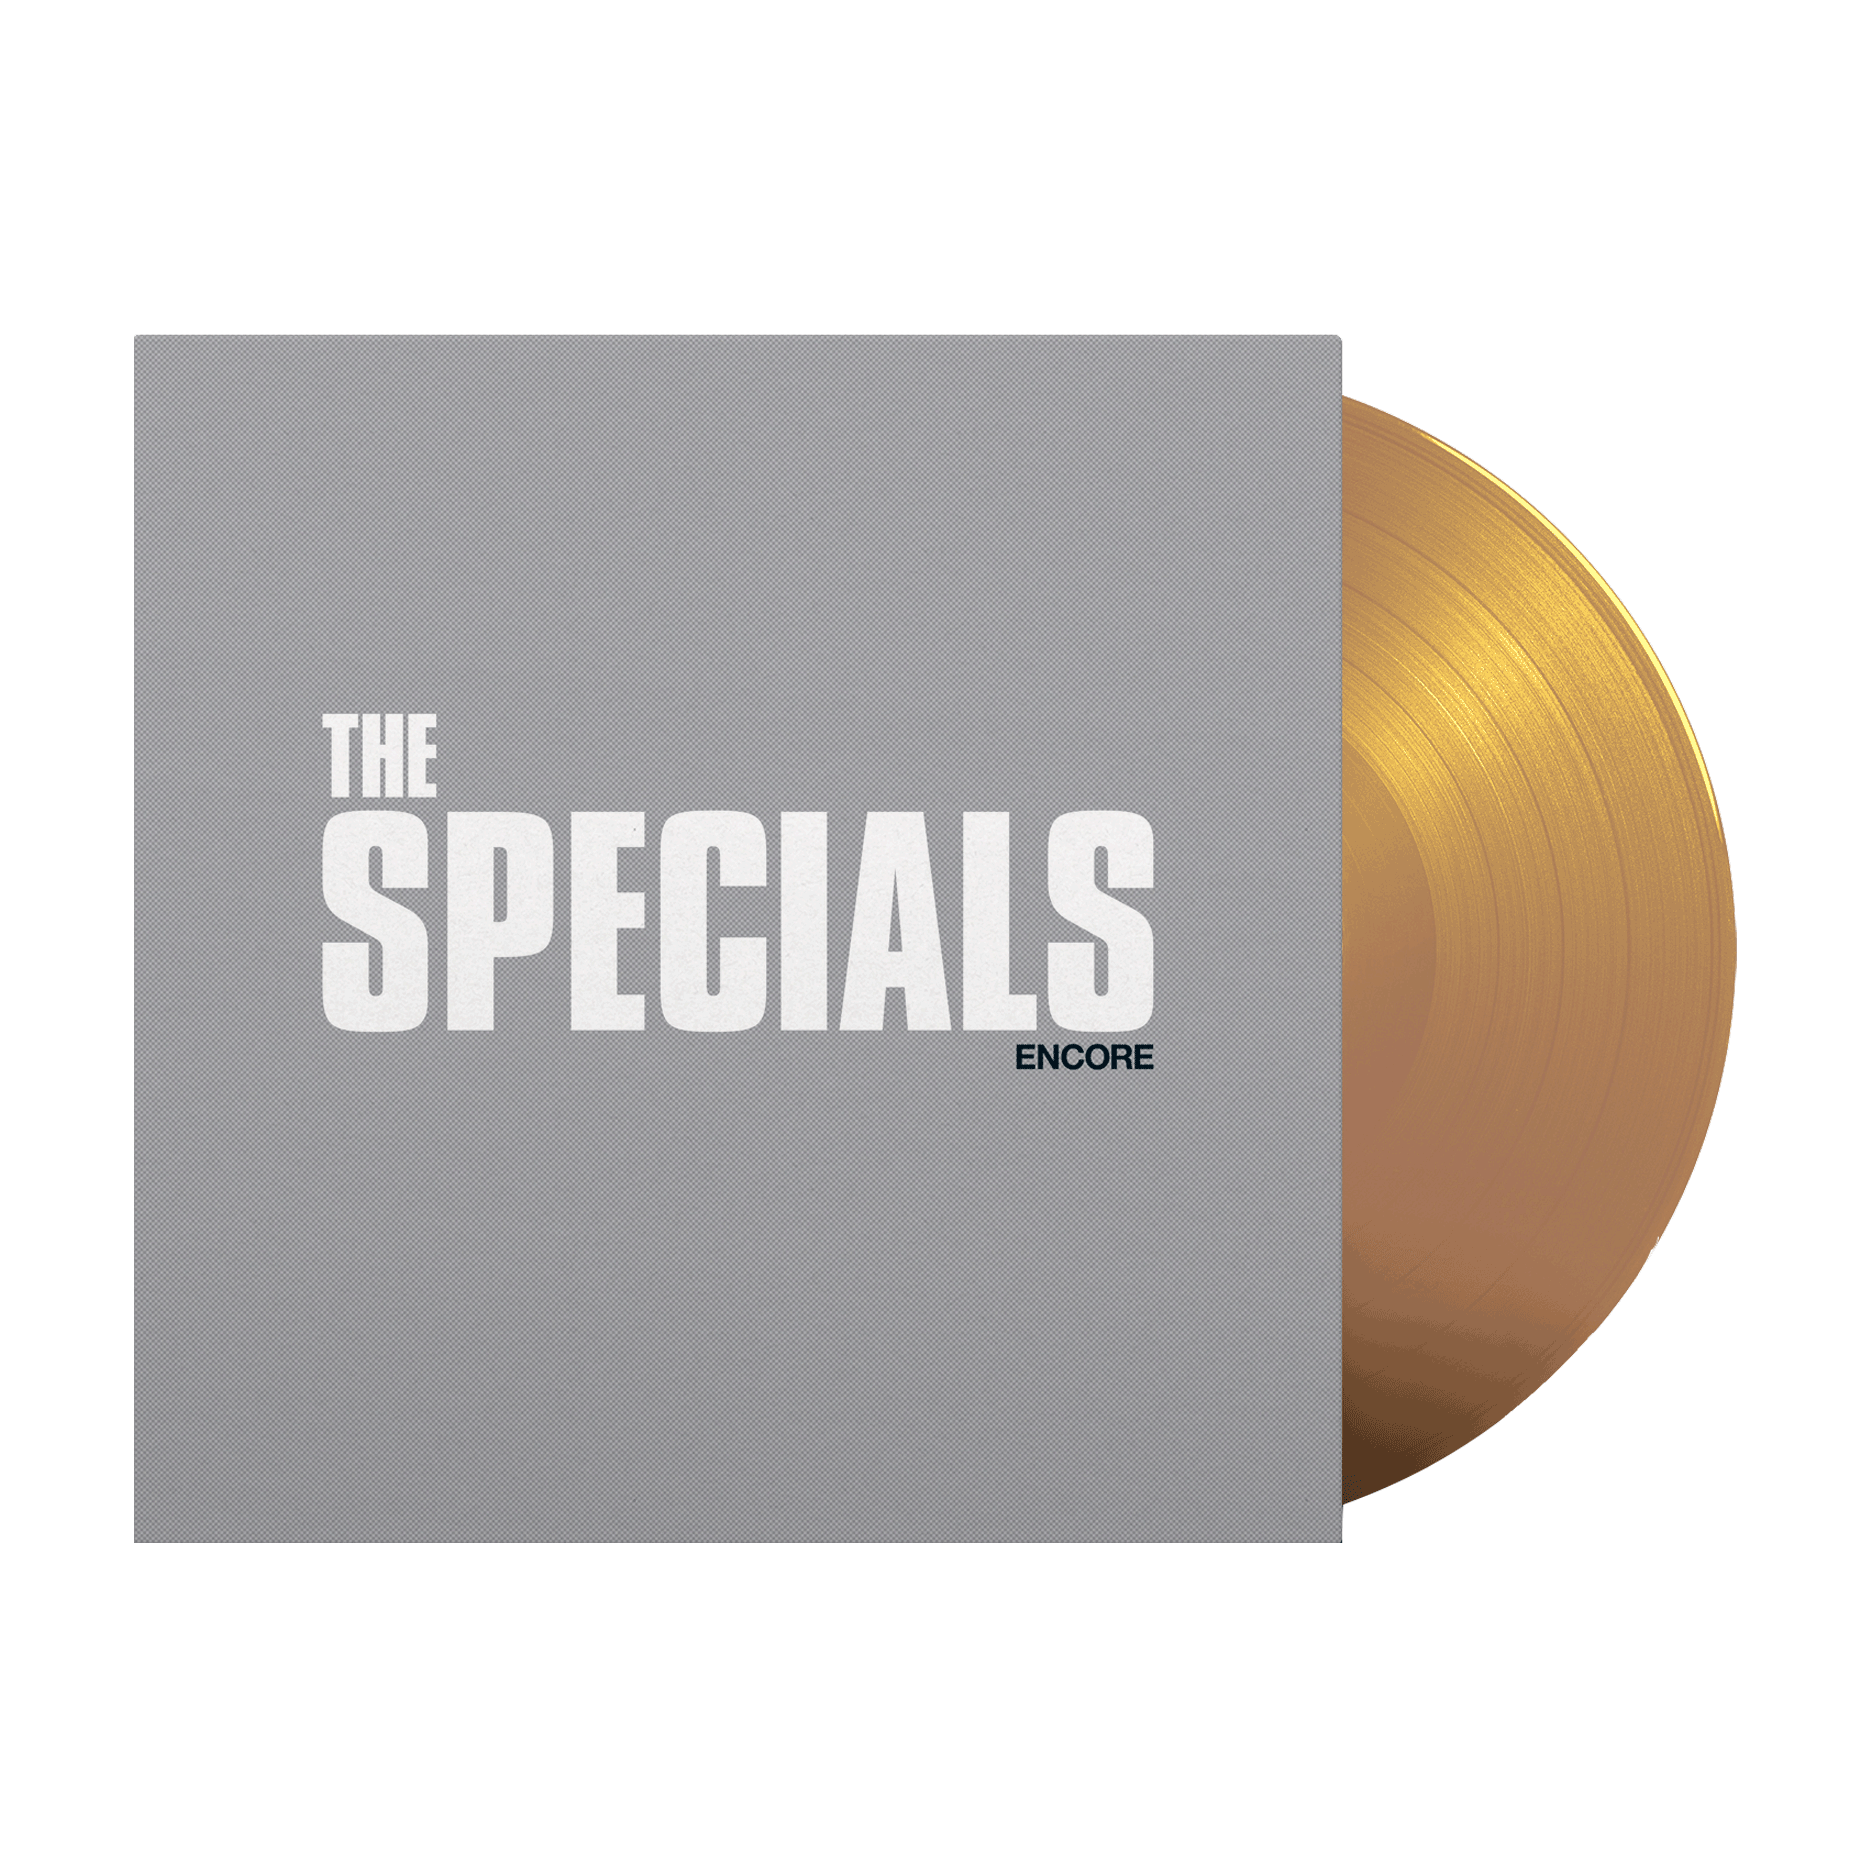 The Specials - Encore: Limited Gold Vinyl LP